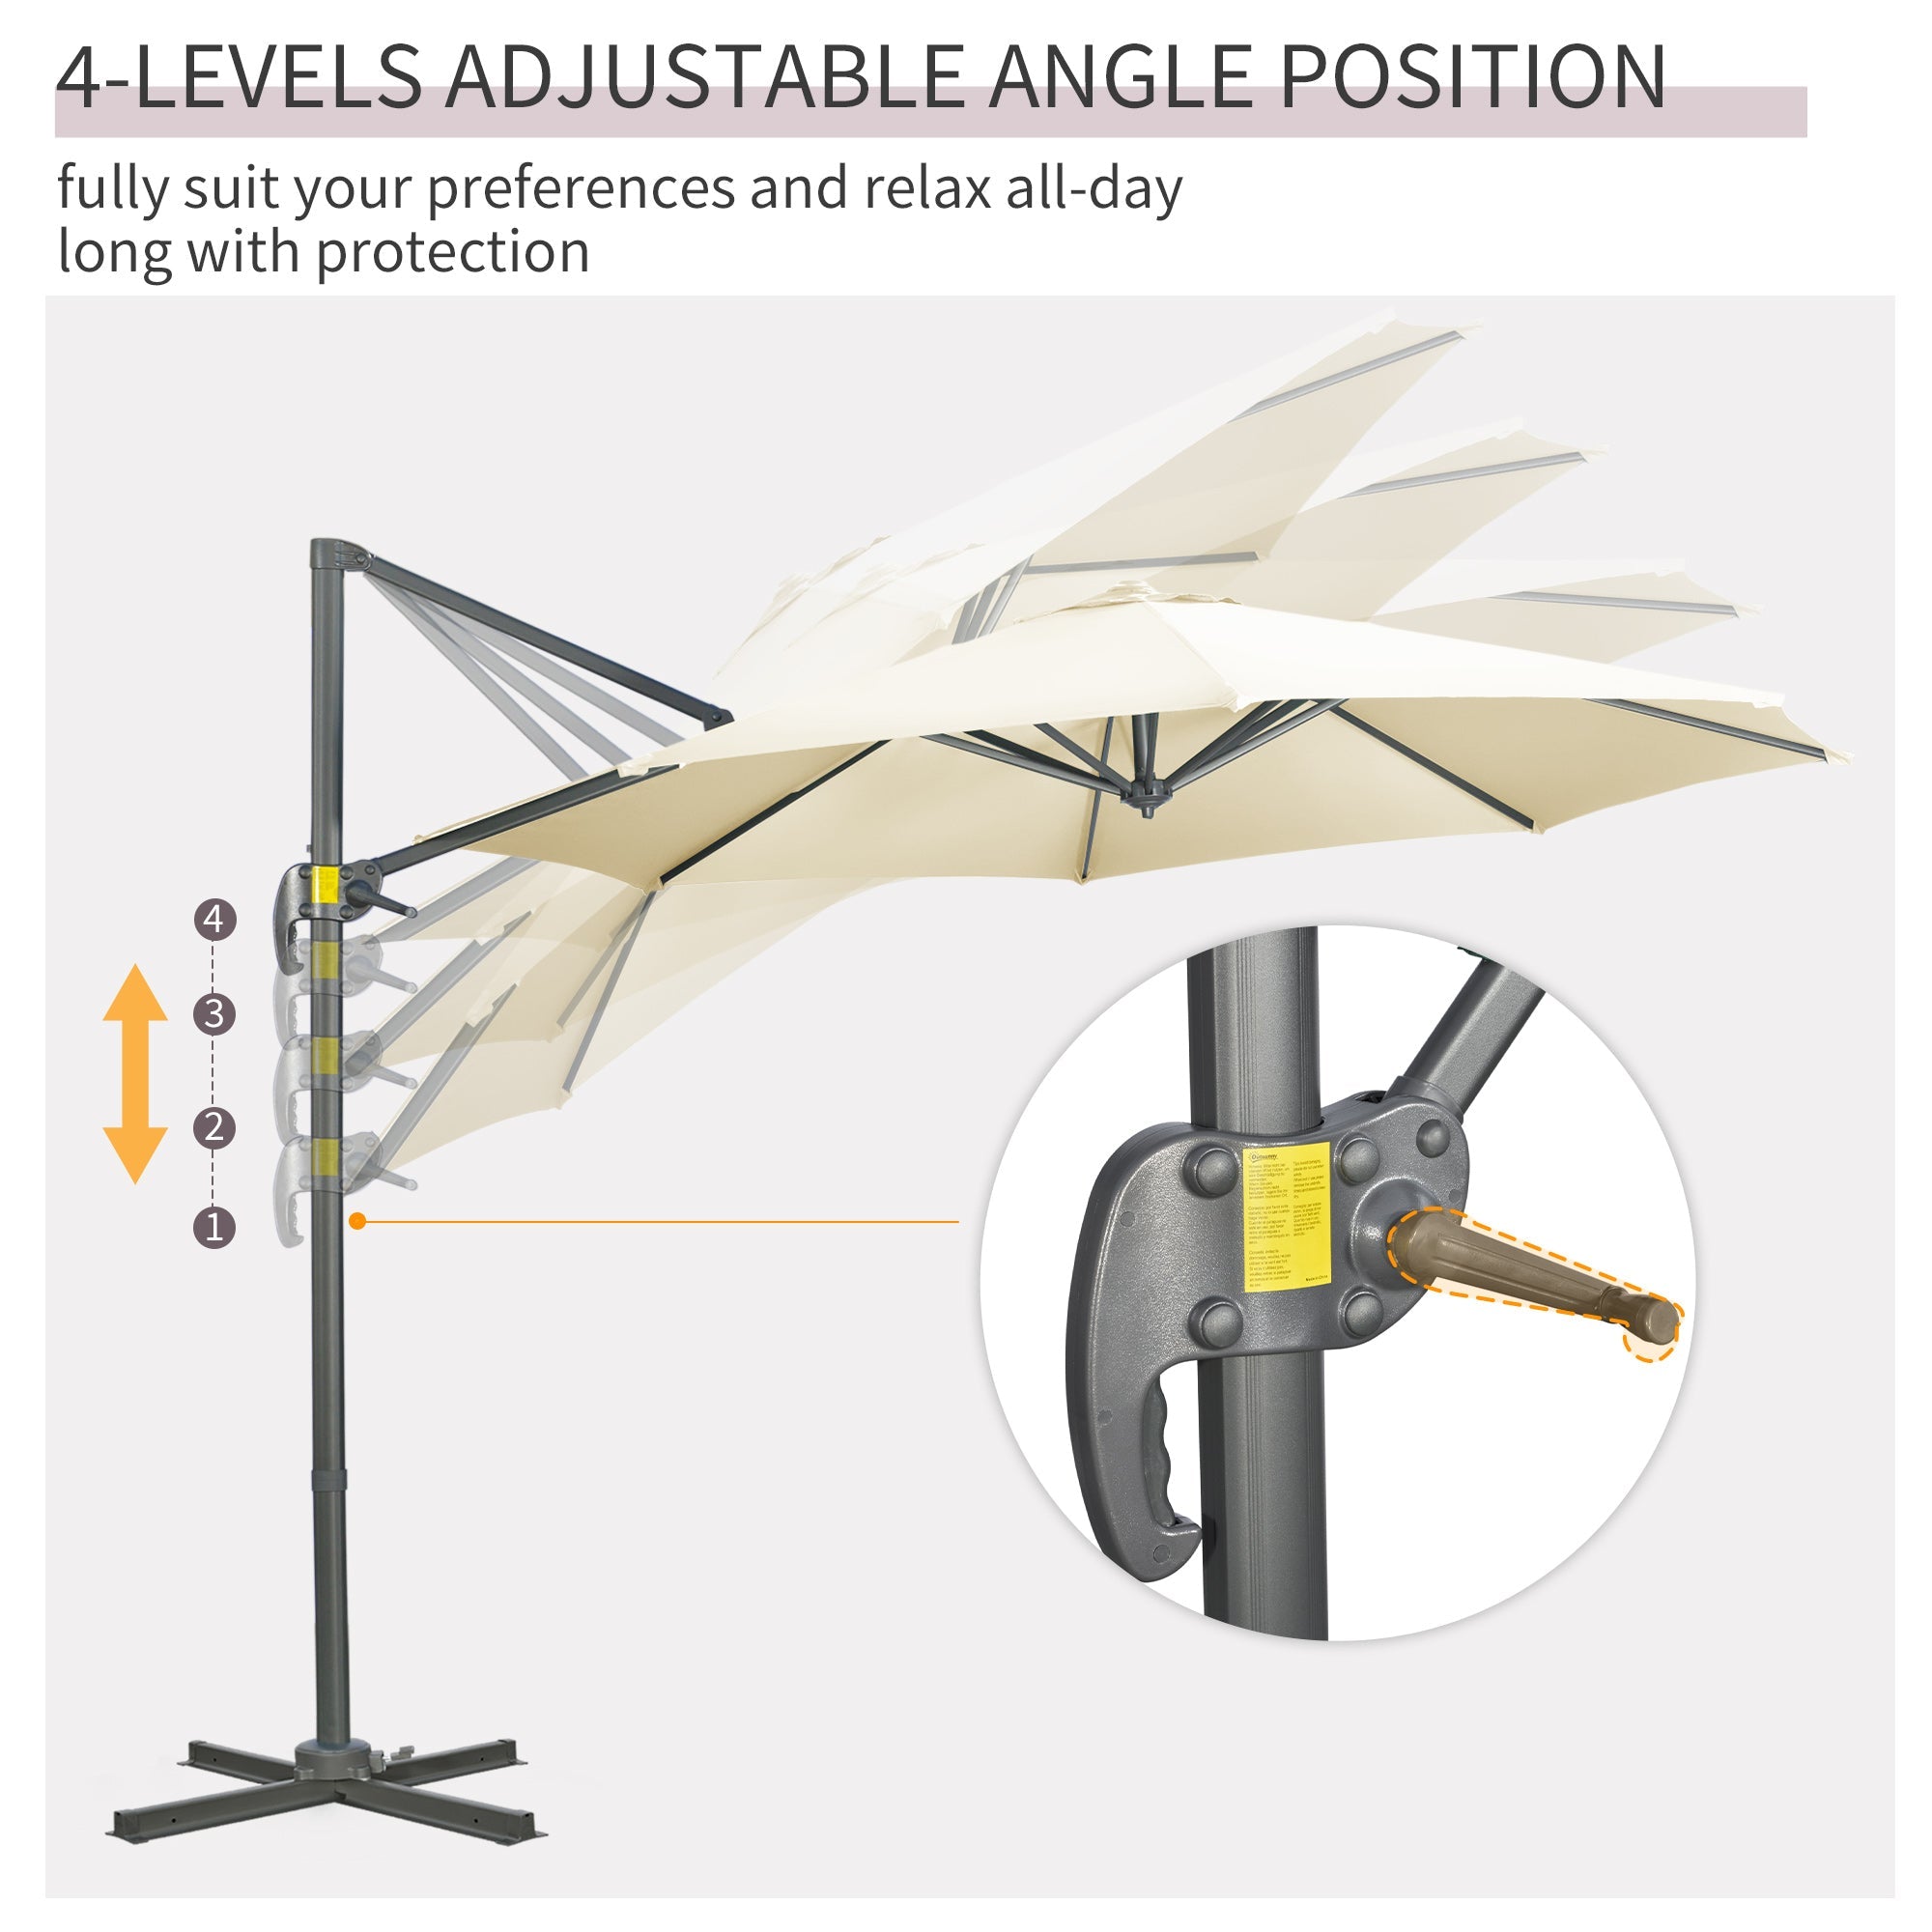 3 x 3(m) Cantilever Parasol with Cross Base, Garden Umbrella with 360° Rotation, Crank Handle and Tilt for Outdoor, Patio, Cream White-4